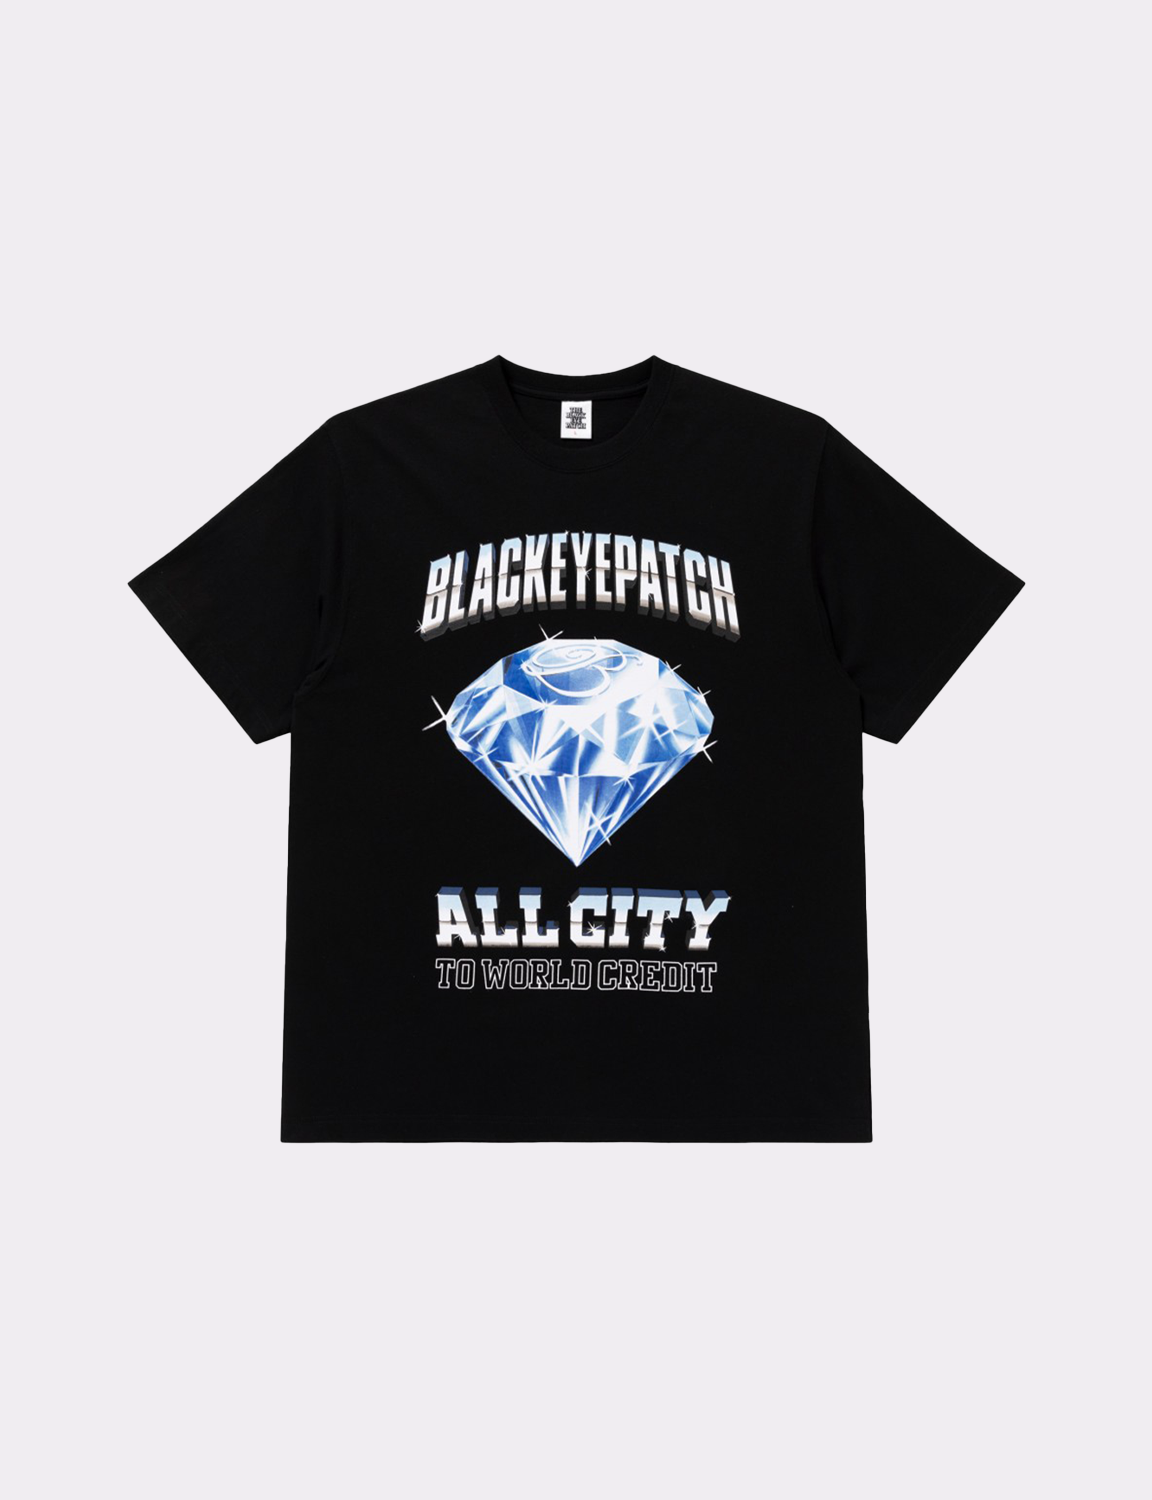 blackeyepatch b emblem oxford shirt